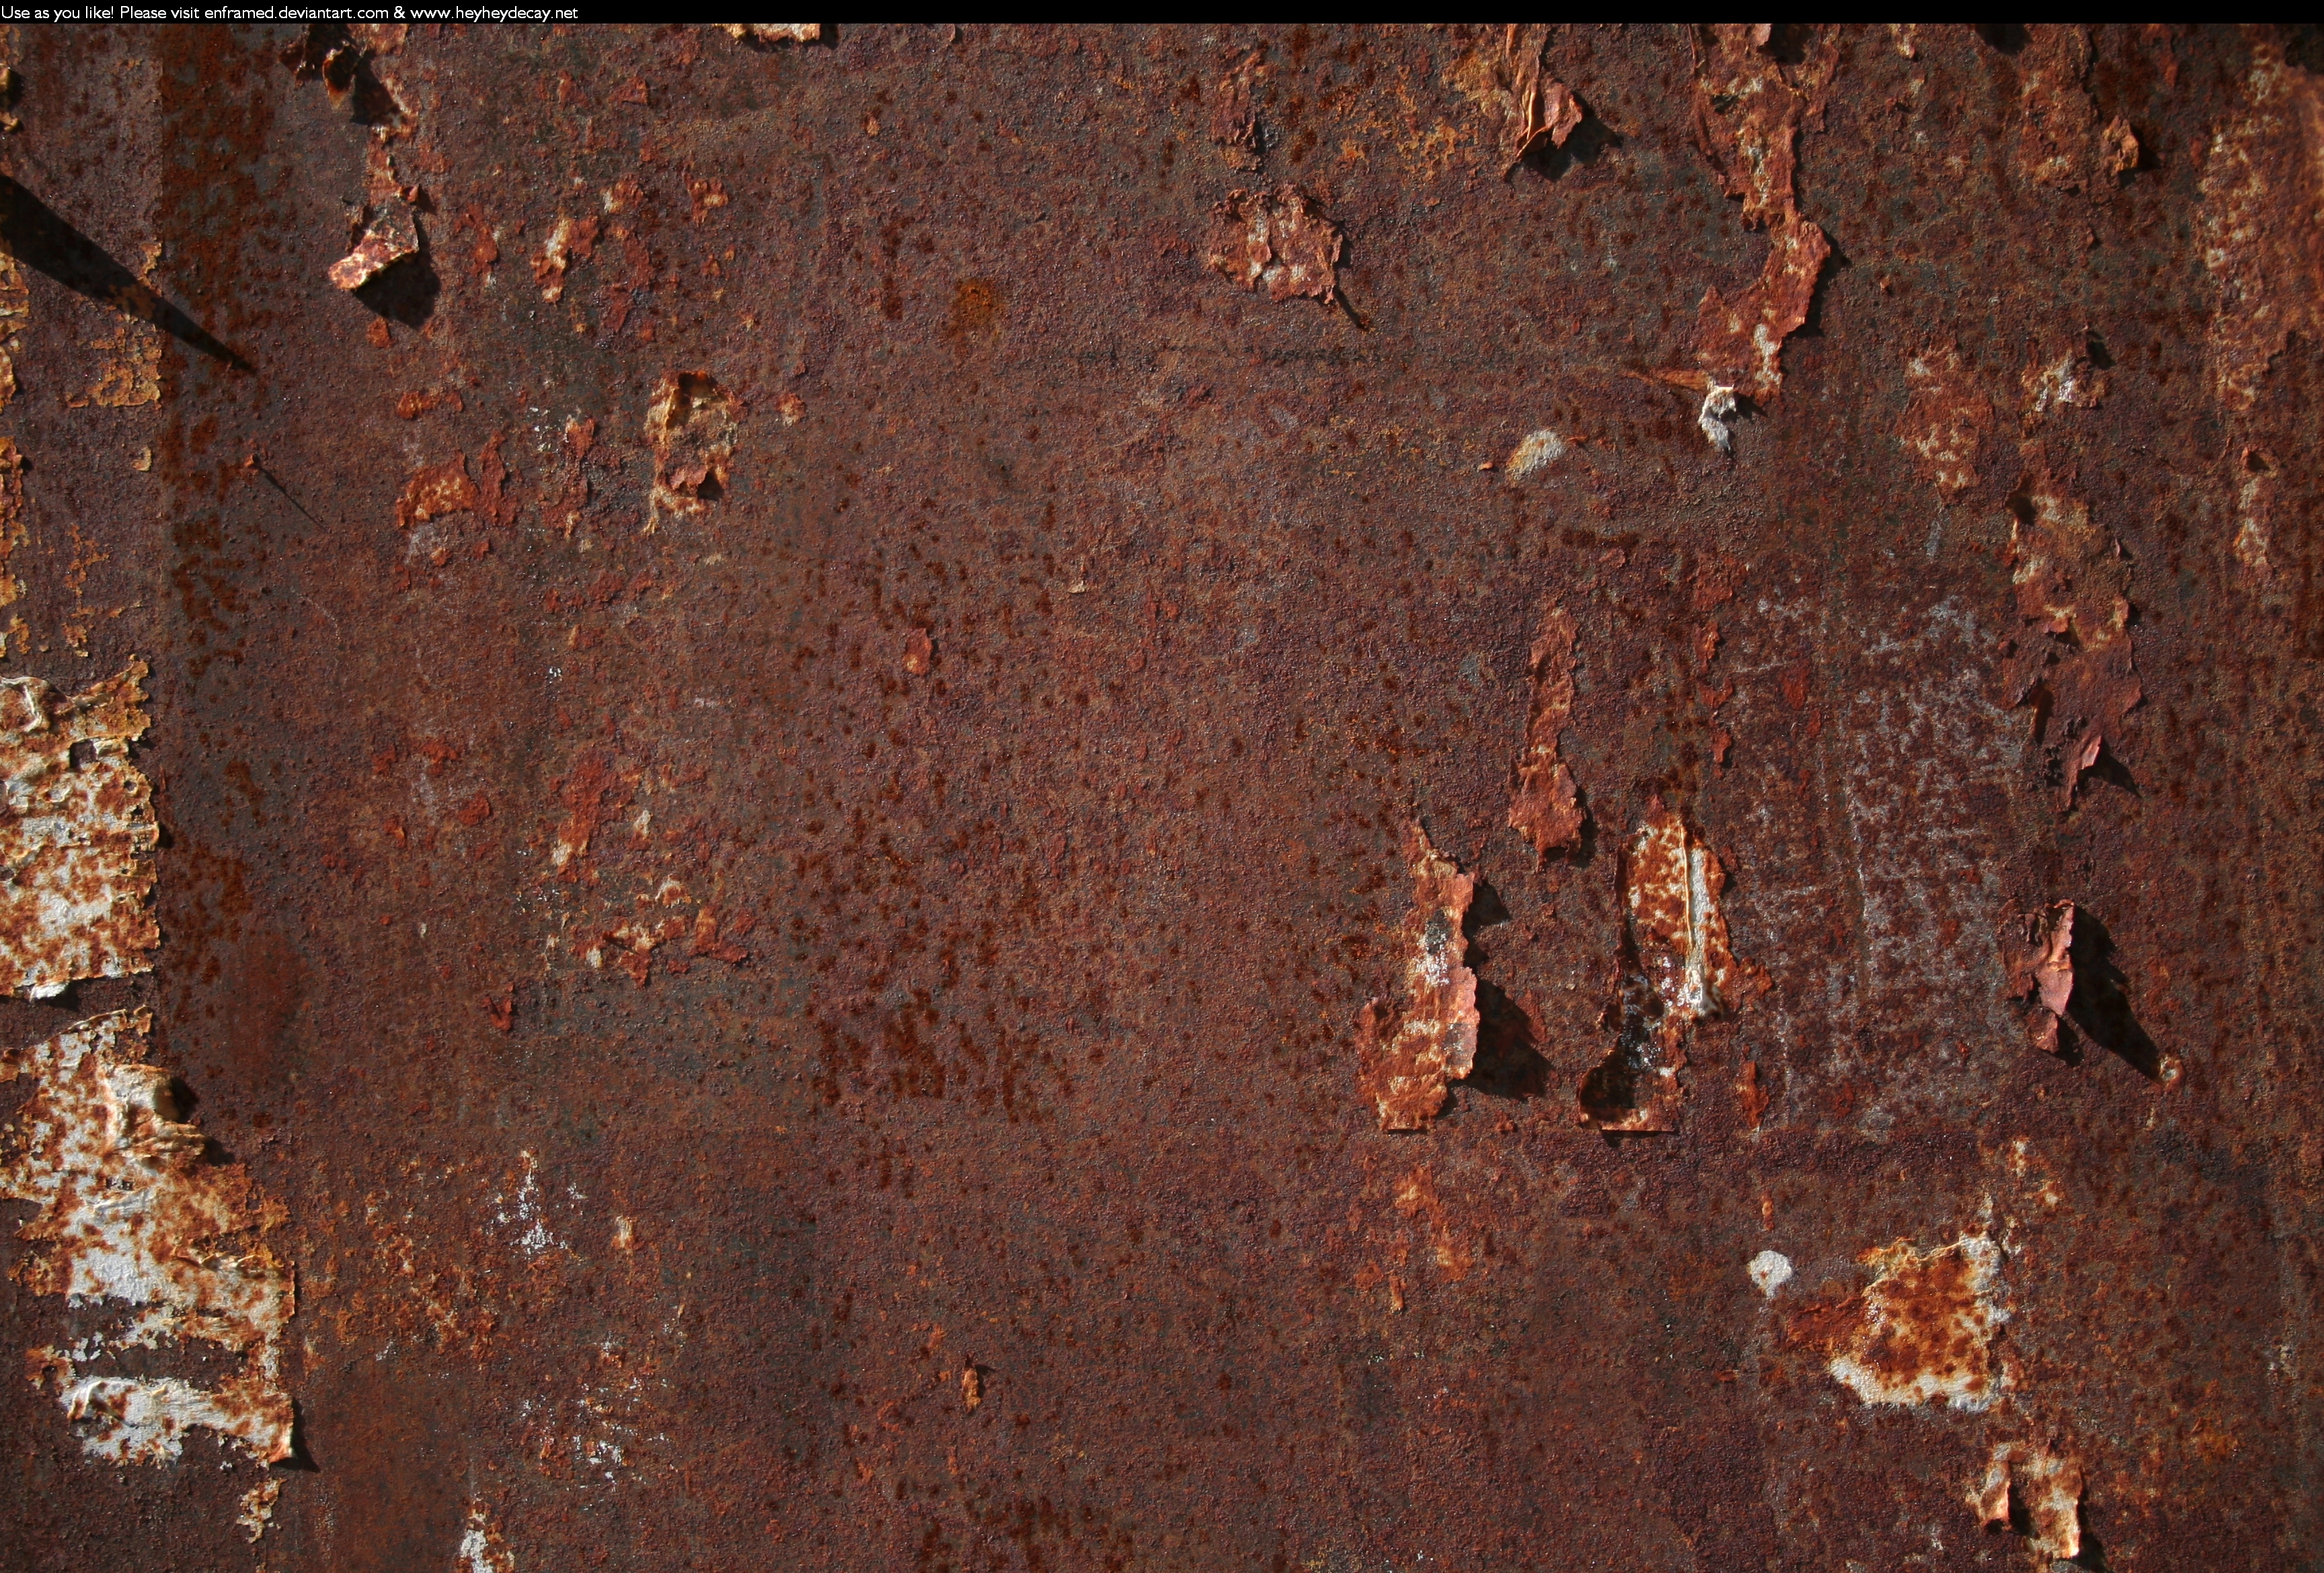 Brown rust texture 2 by enframed on DeviantArt